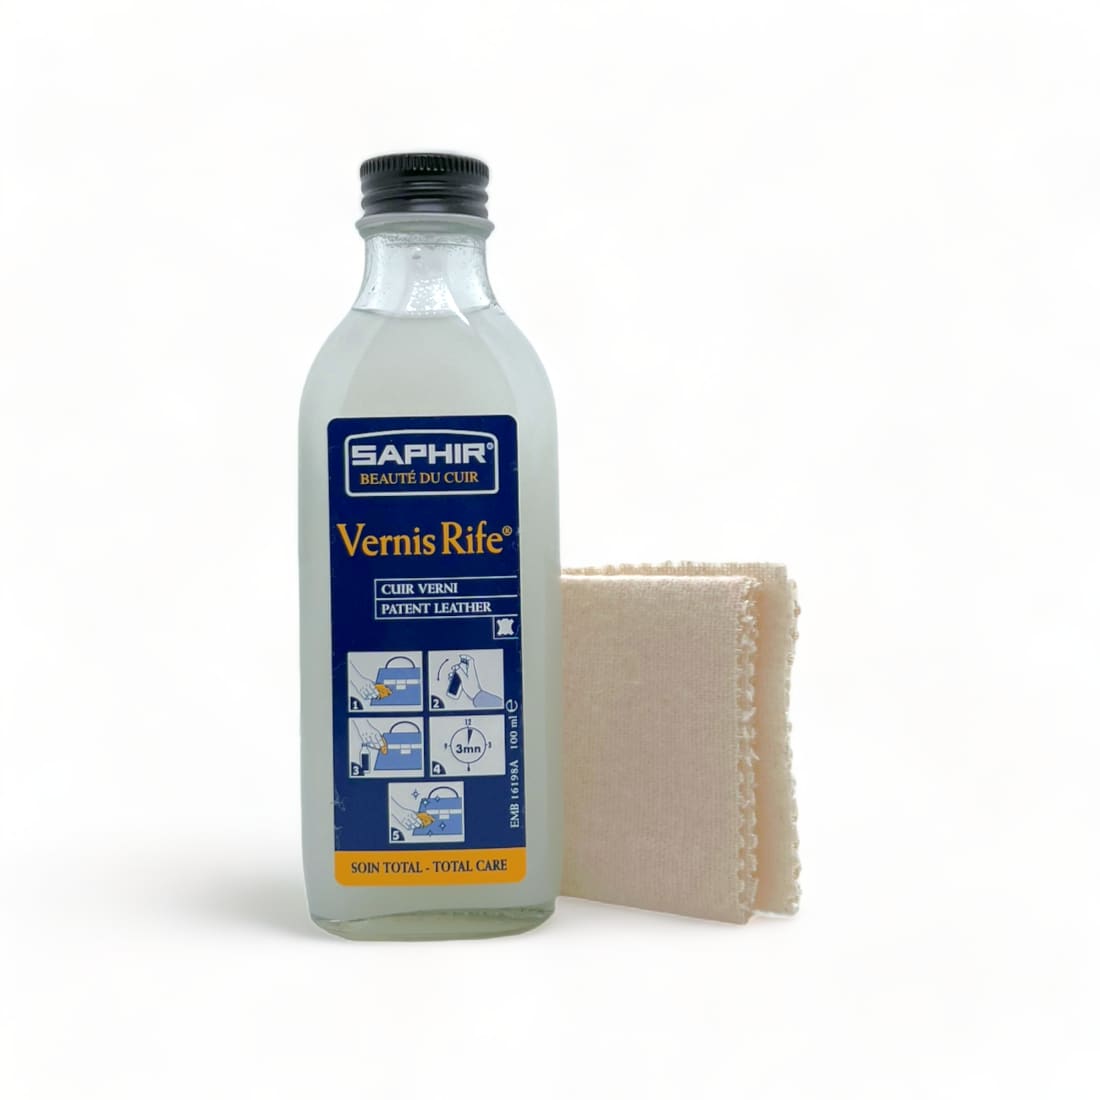 Vernis Rife Incolore - Saphir - 100 ml - Accessoires